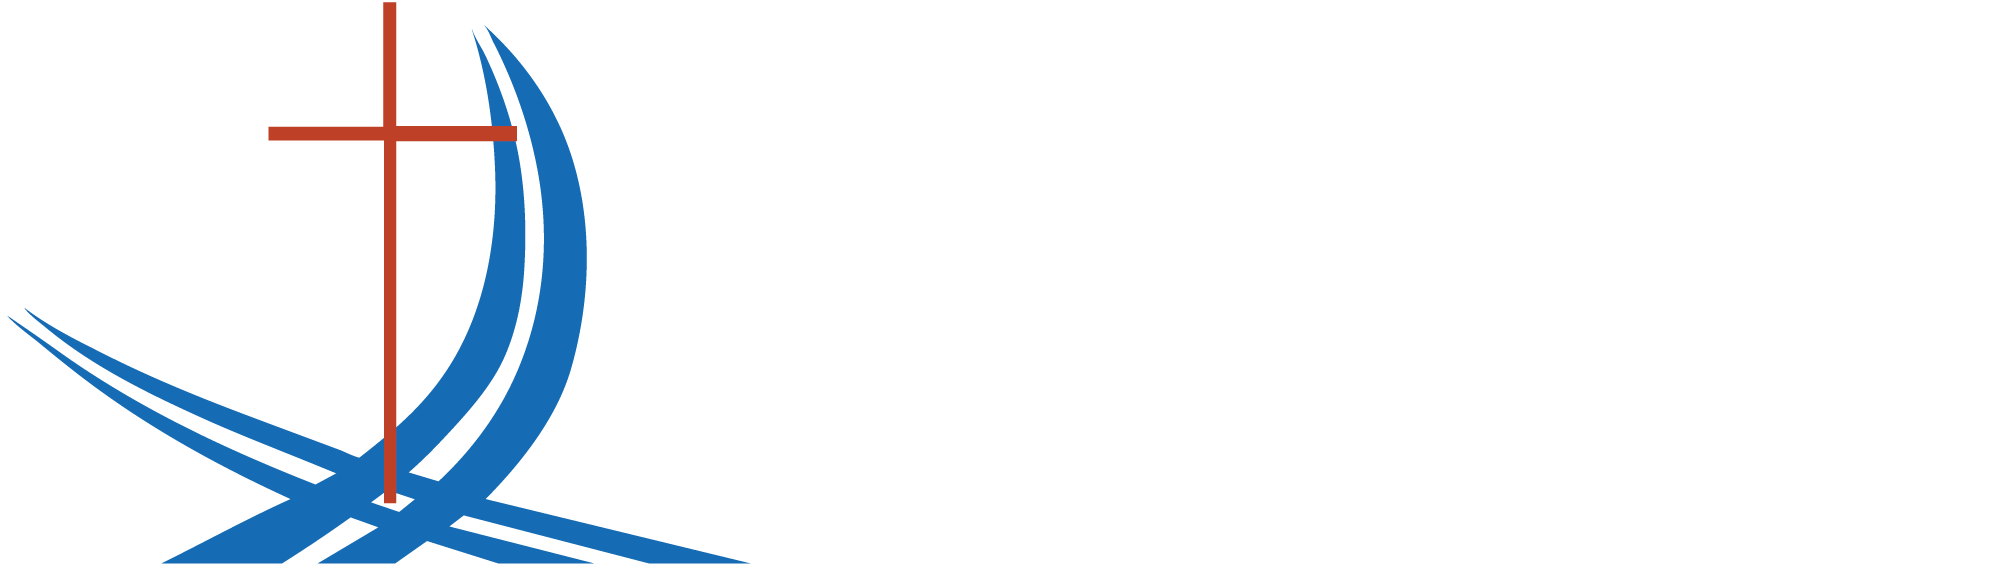 First Baptist Church Posey Crossroads – Prattville, AL